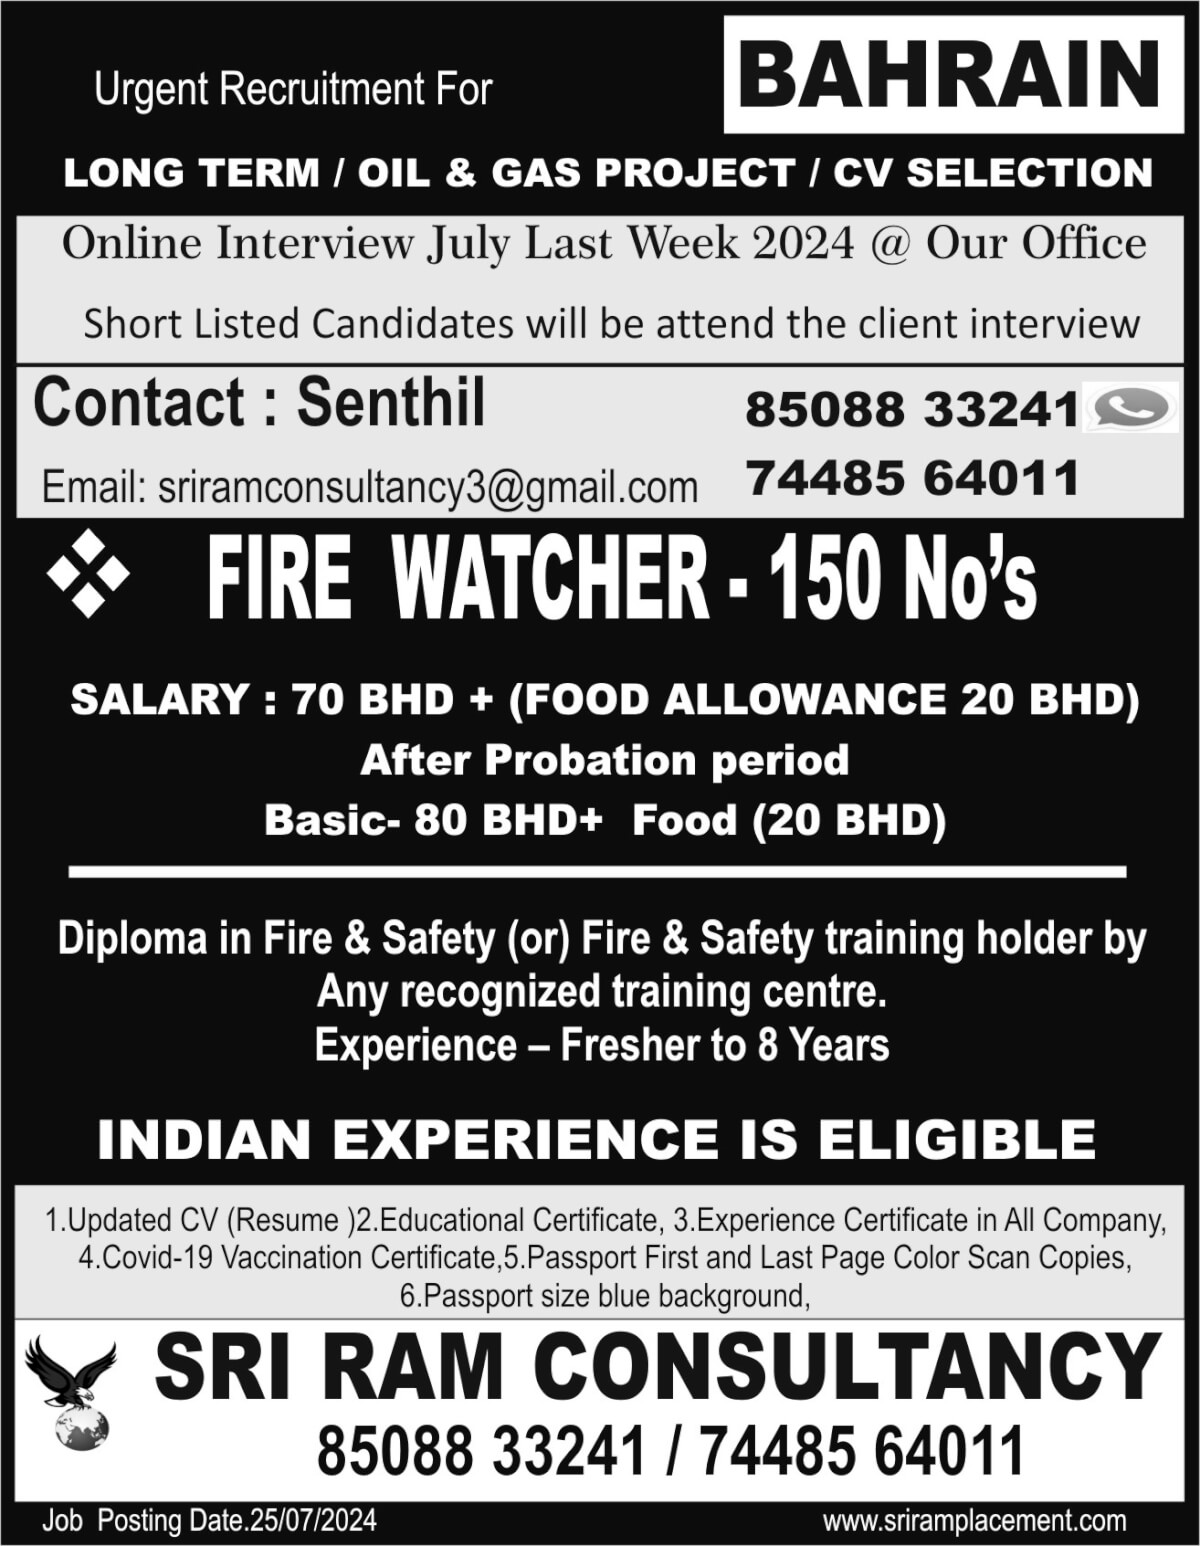 Urgent Recruitment for UAE Oil & Gas Long Term Project Fire Watcher,  apply : sriramconsultancy3@gmail.com / visit https://www.sriramplacement.com